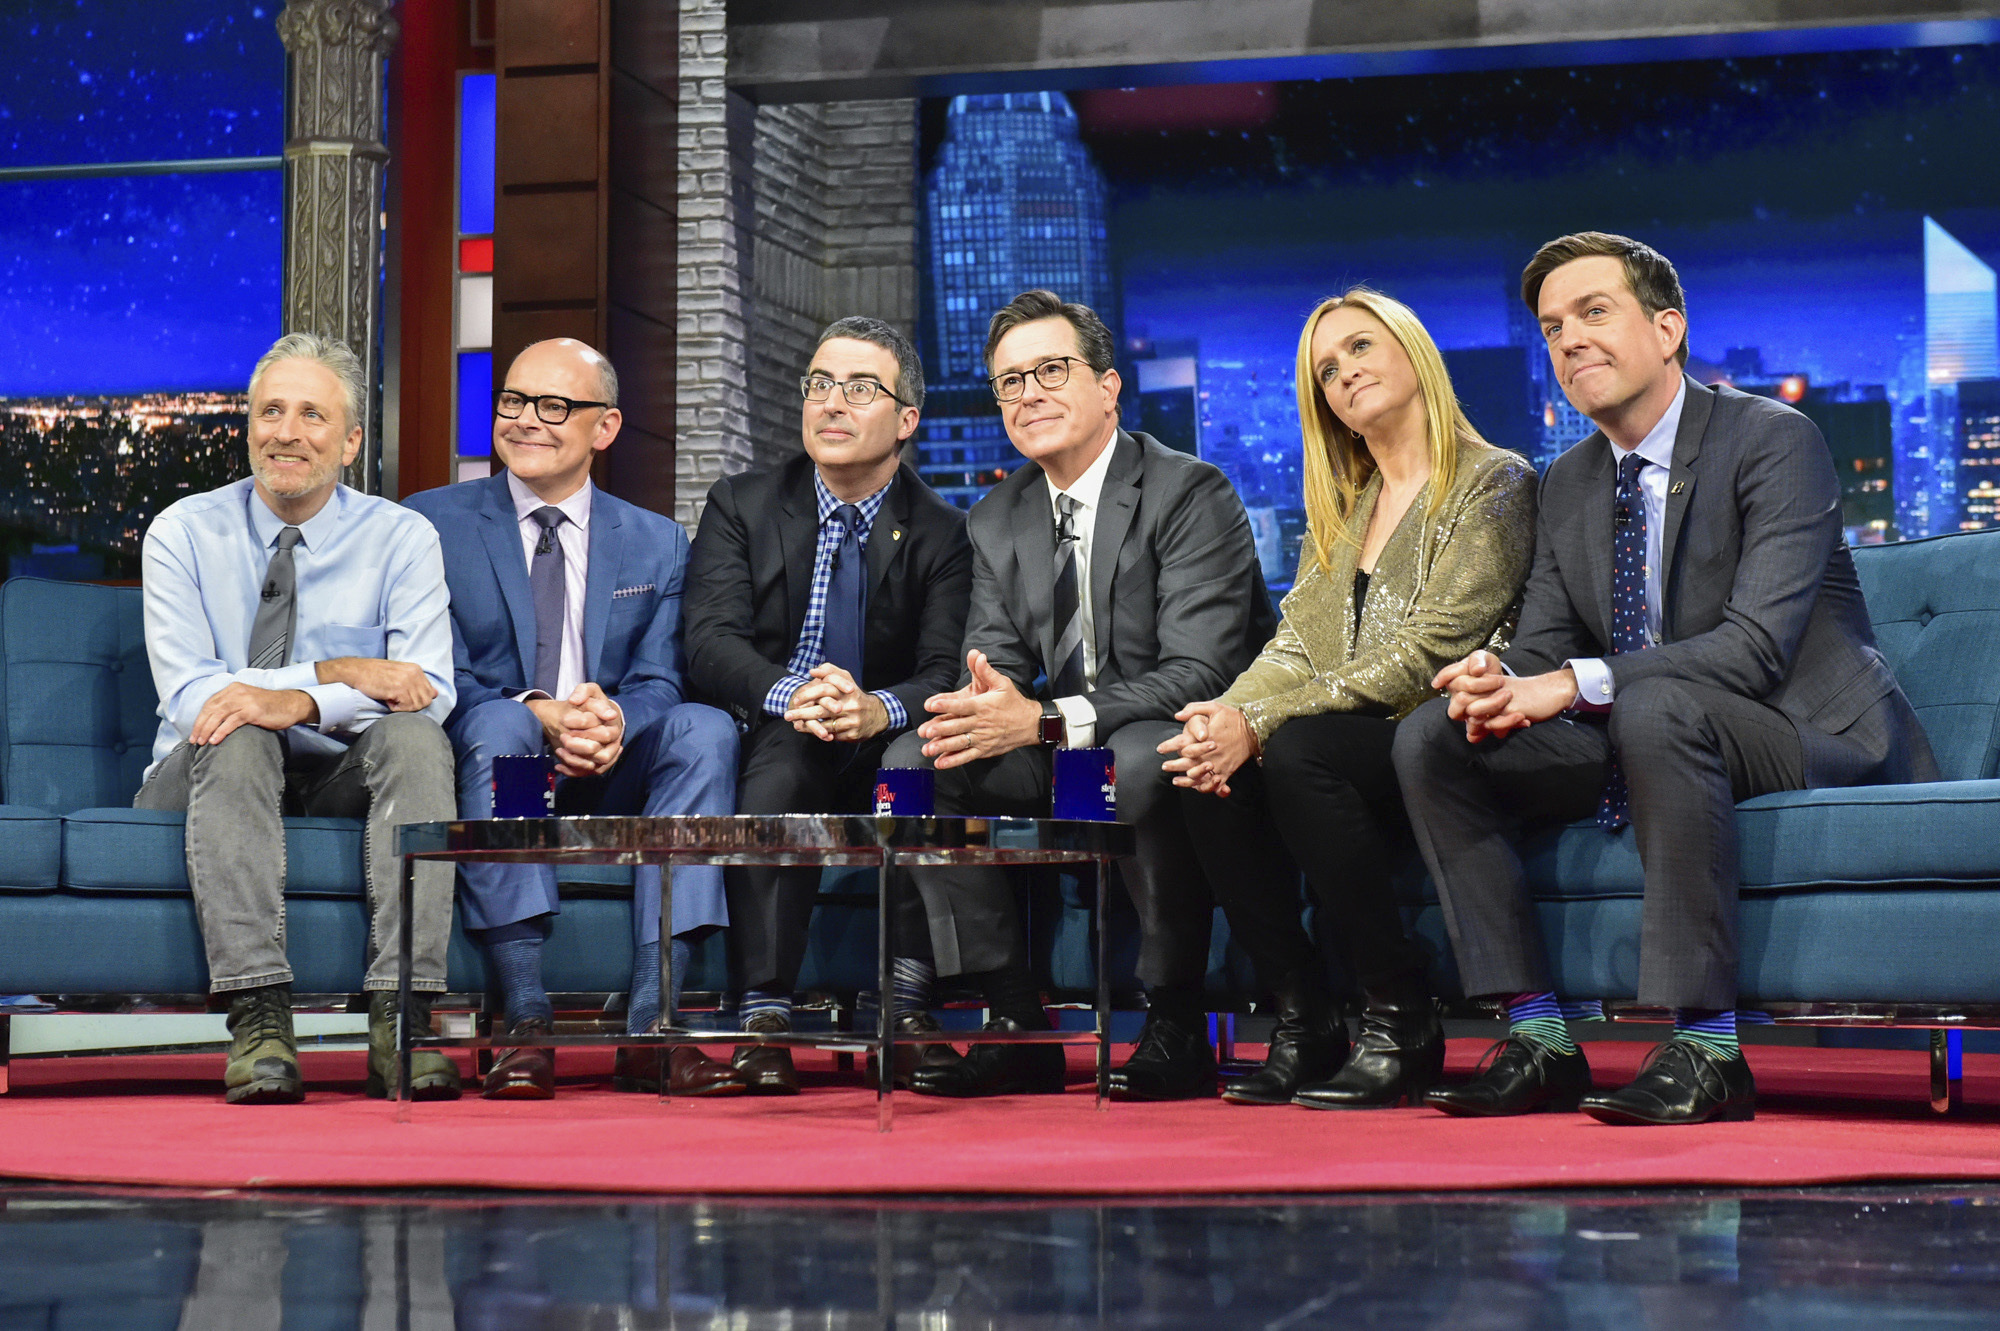 Jon Stewart, Stephen Colbert, Samantha Bee, Ed Helms, John Oliver, Rob Corddry